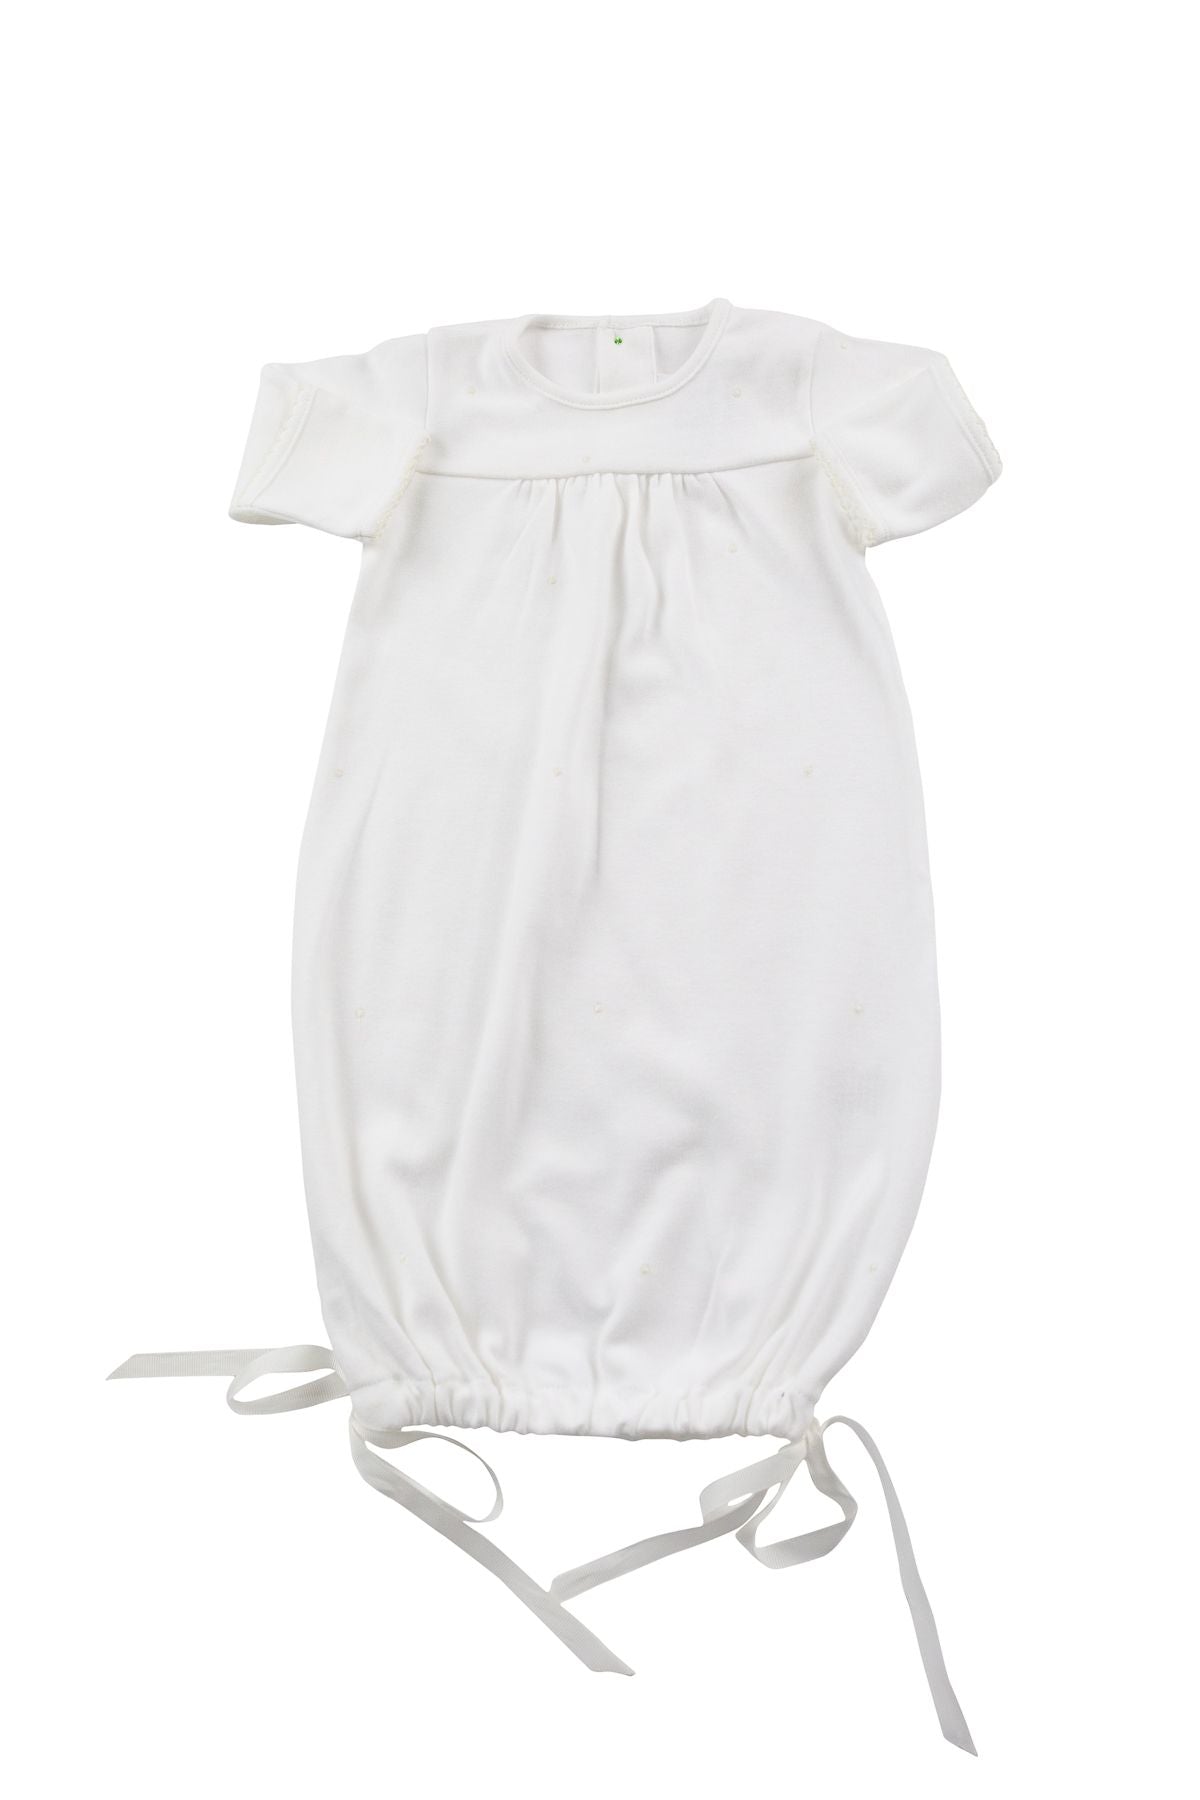 Grayson Knit Gown Scallop - Ecru - Breckenridge Baby